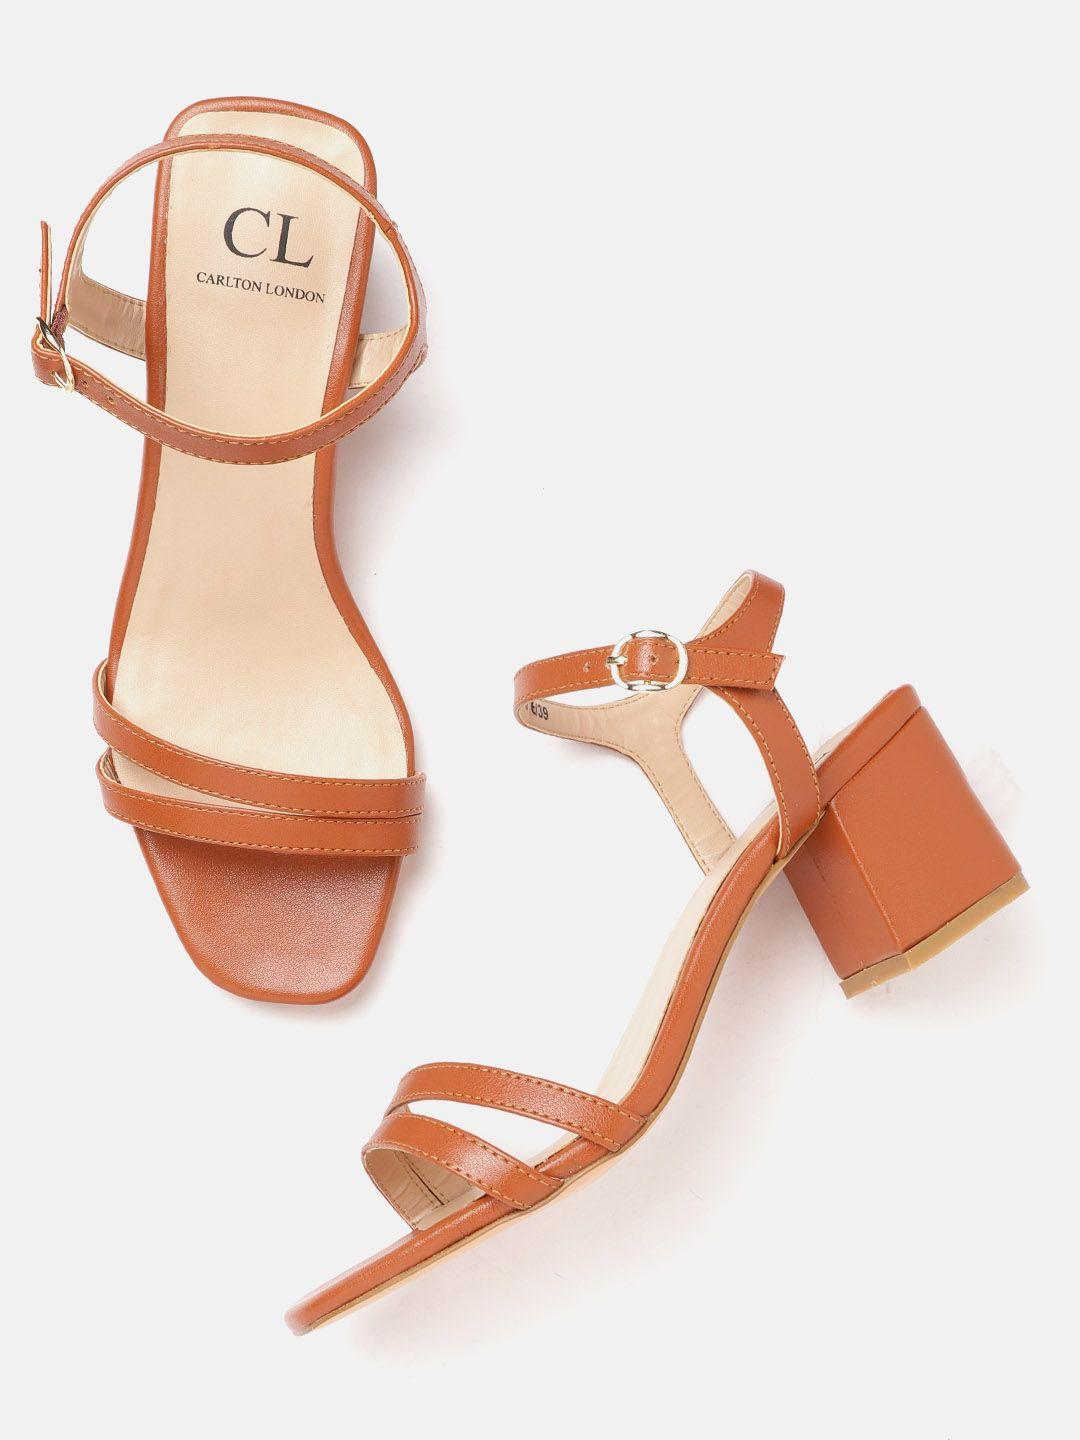 carlton london tan brown solid block heels